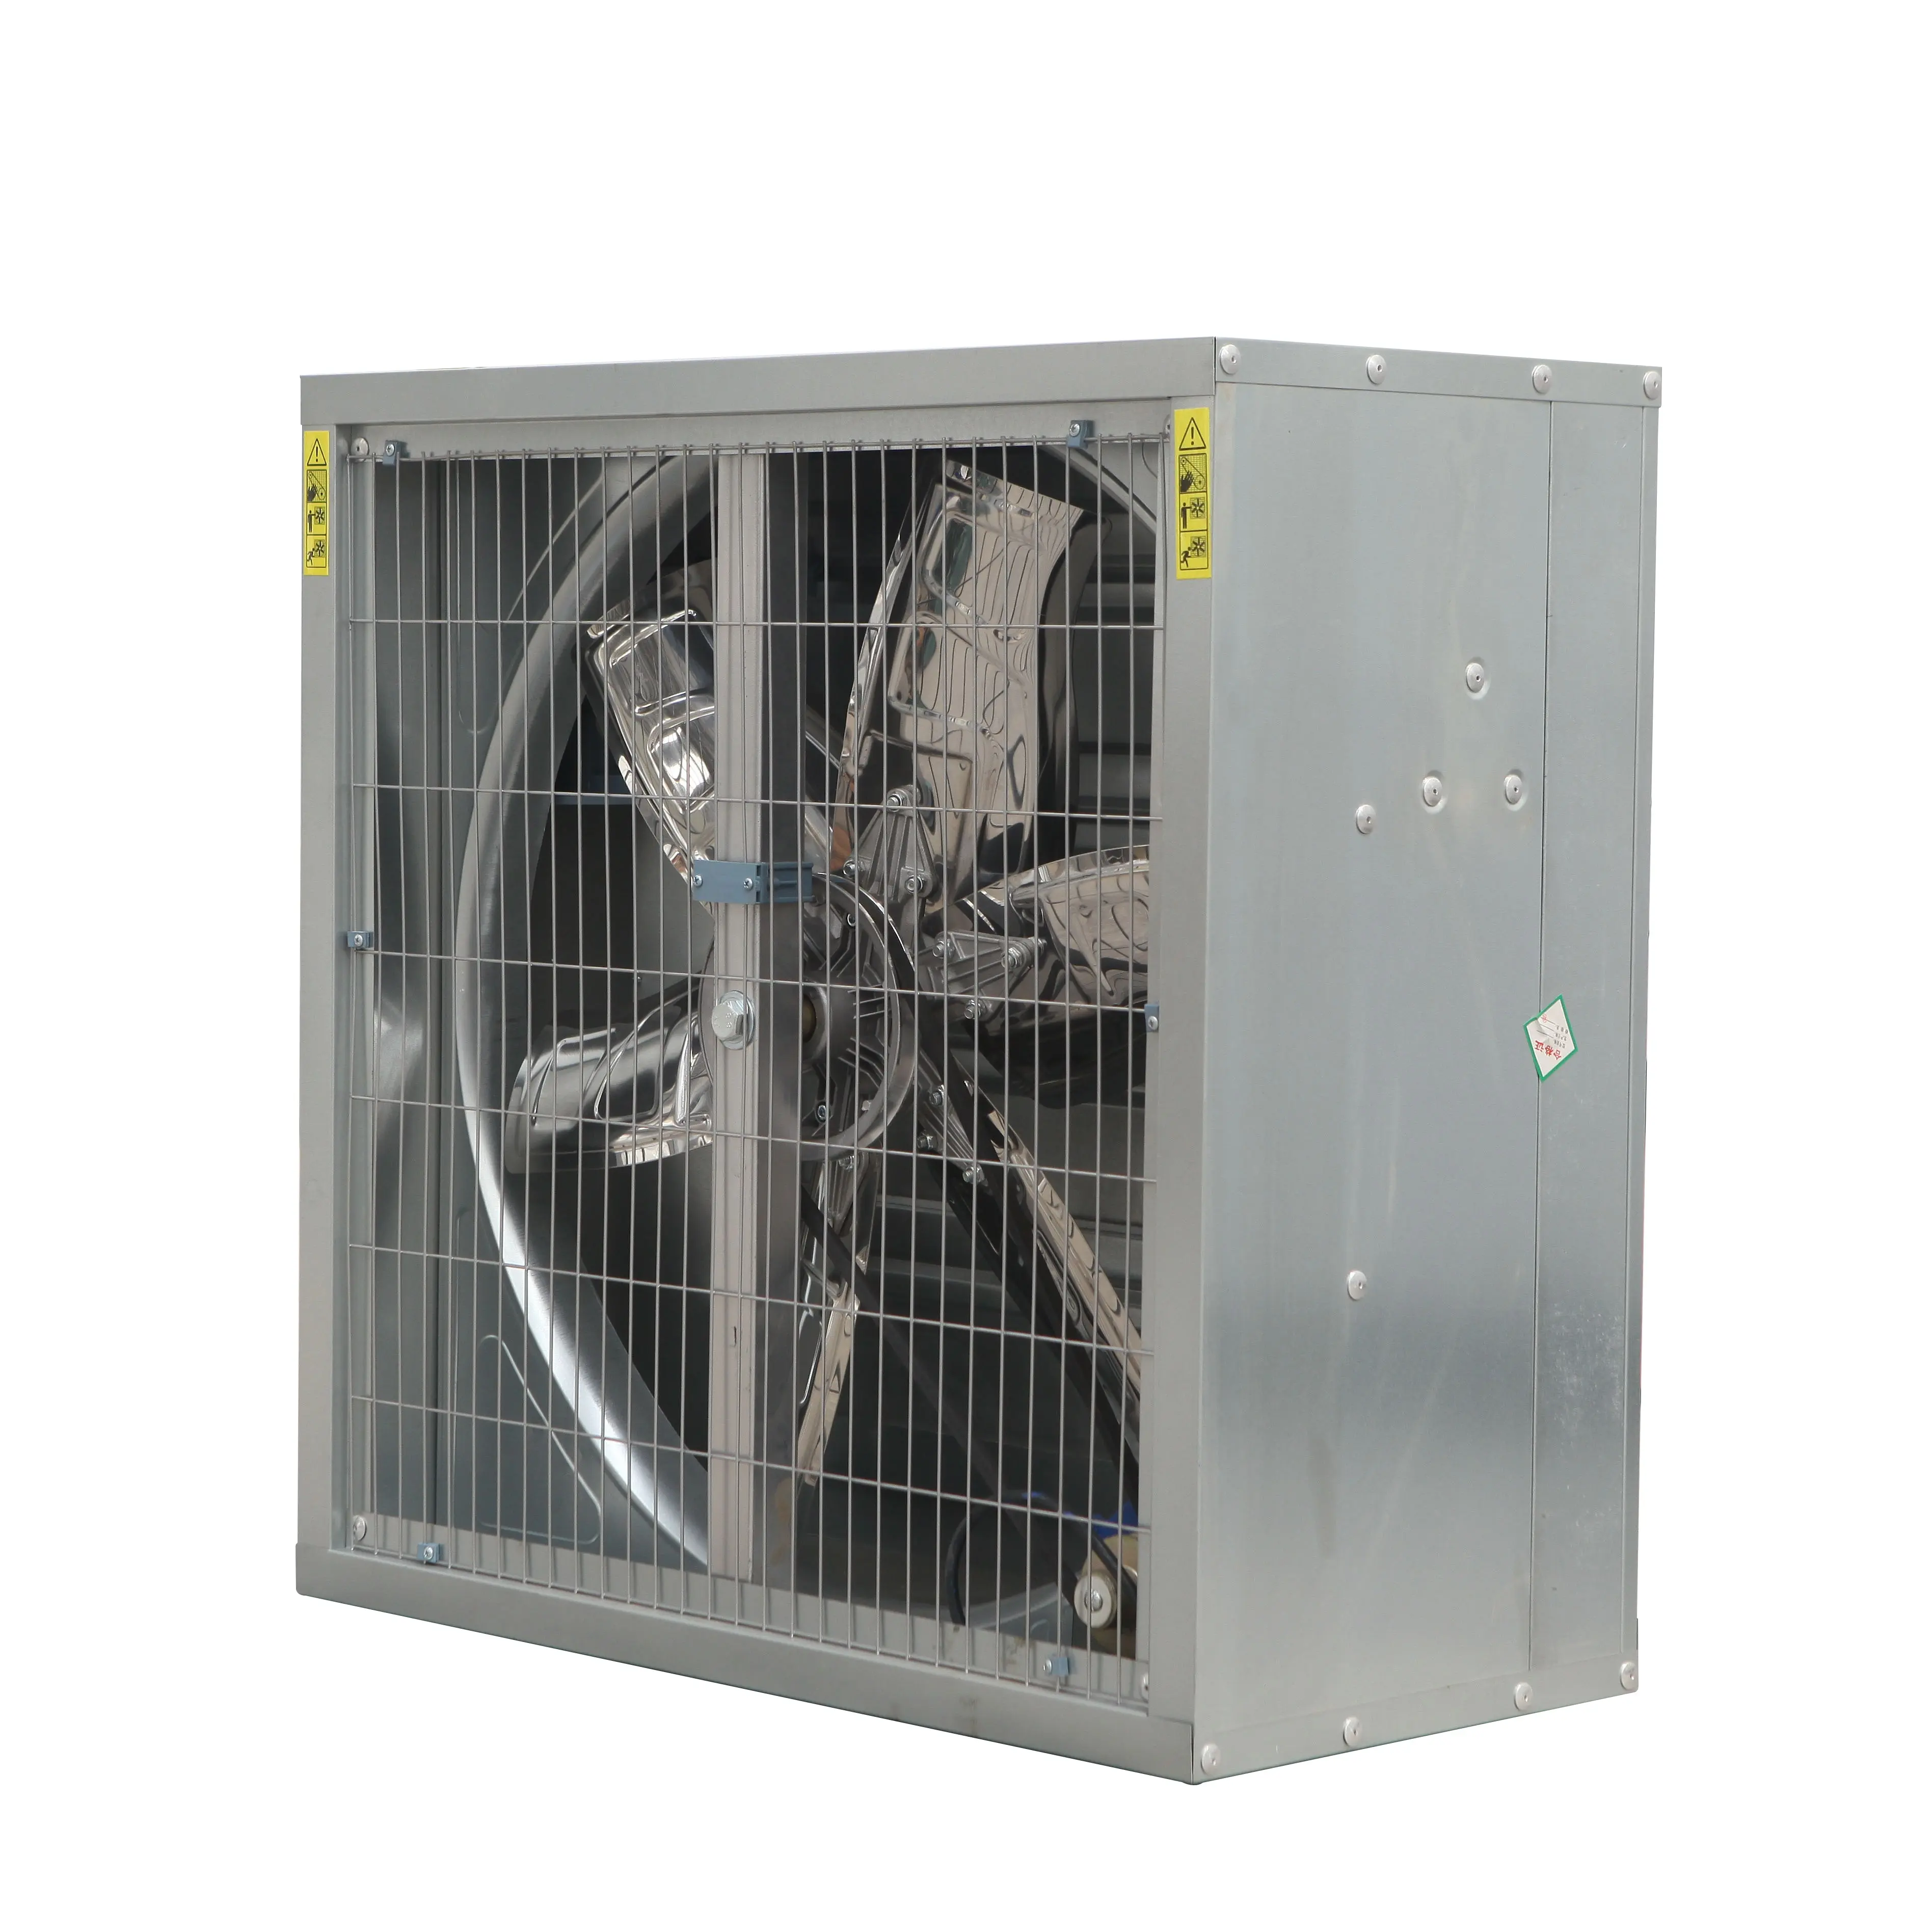 Gran ventilador de escape industrial/control de temperatura exterior/invernadero